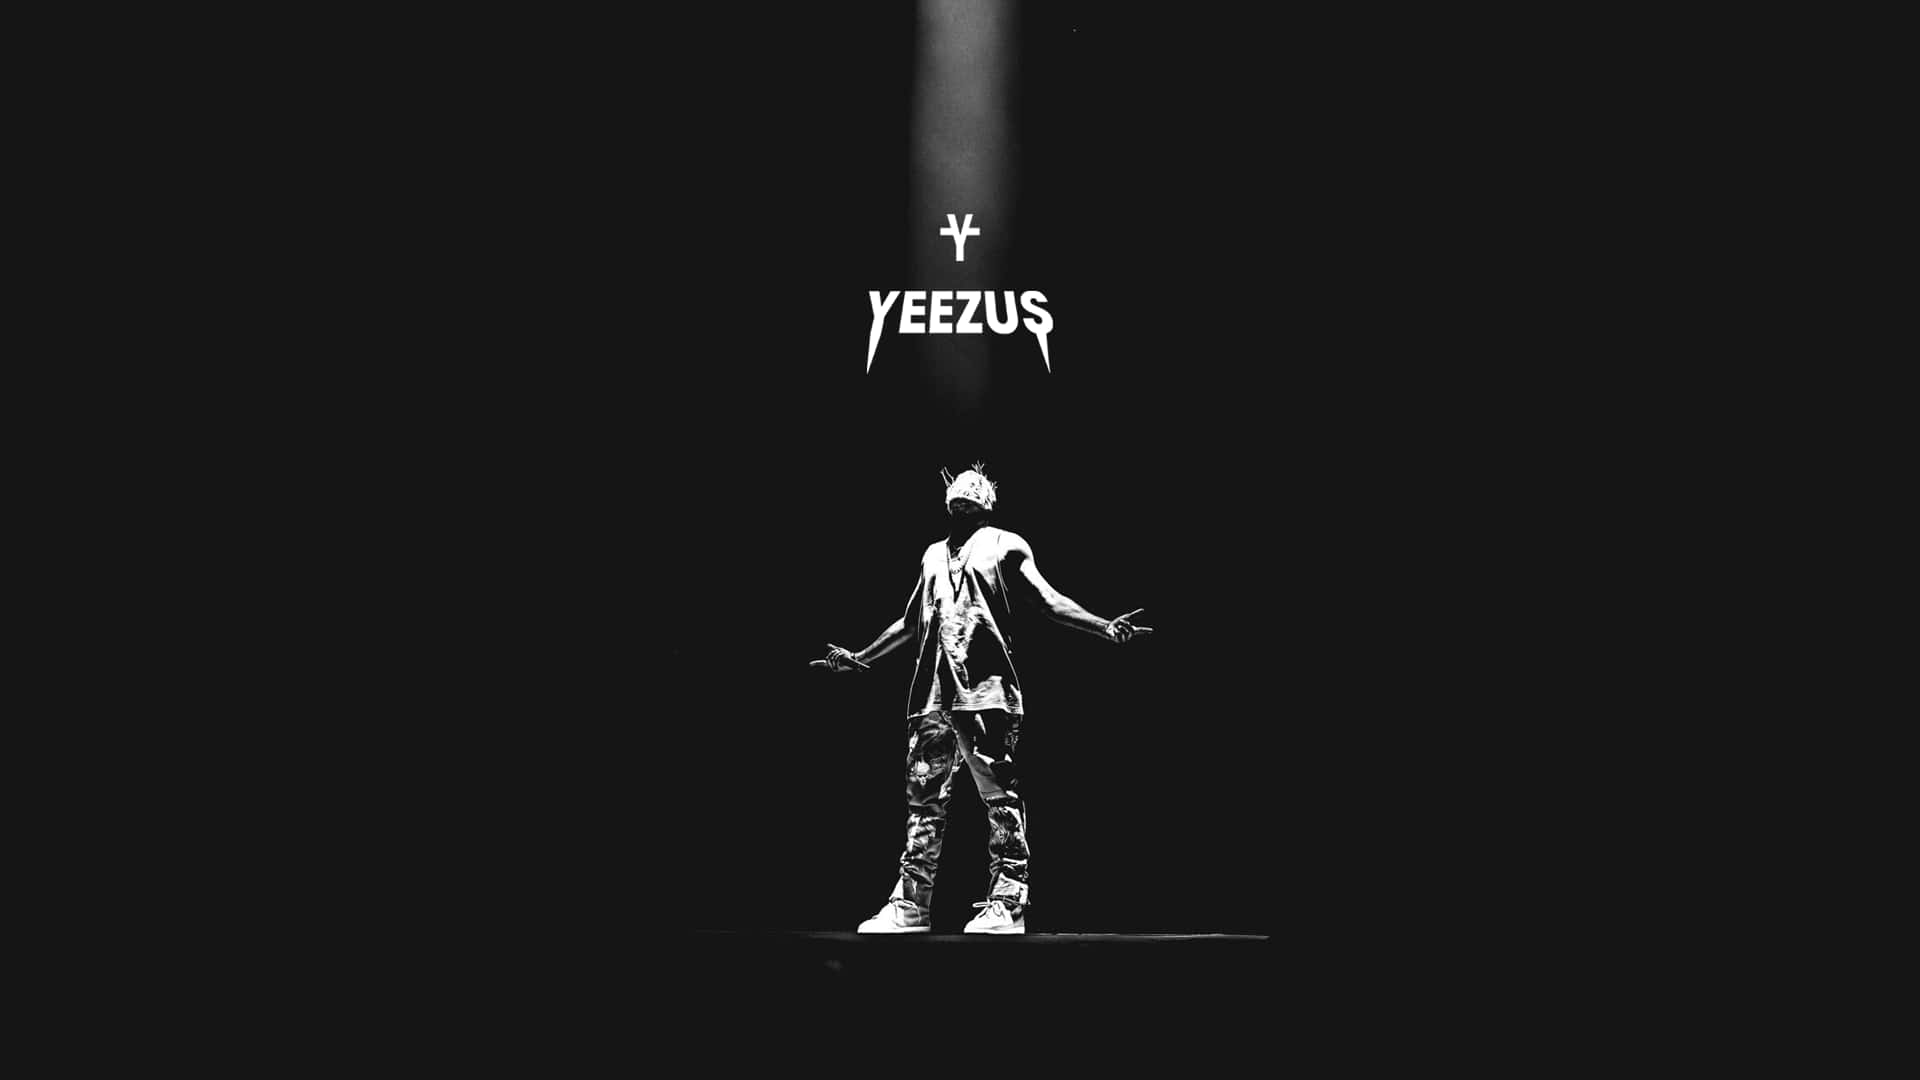 Kanye West in Yeezus tour Wallpaper